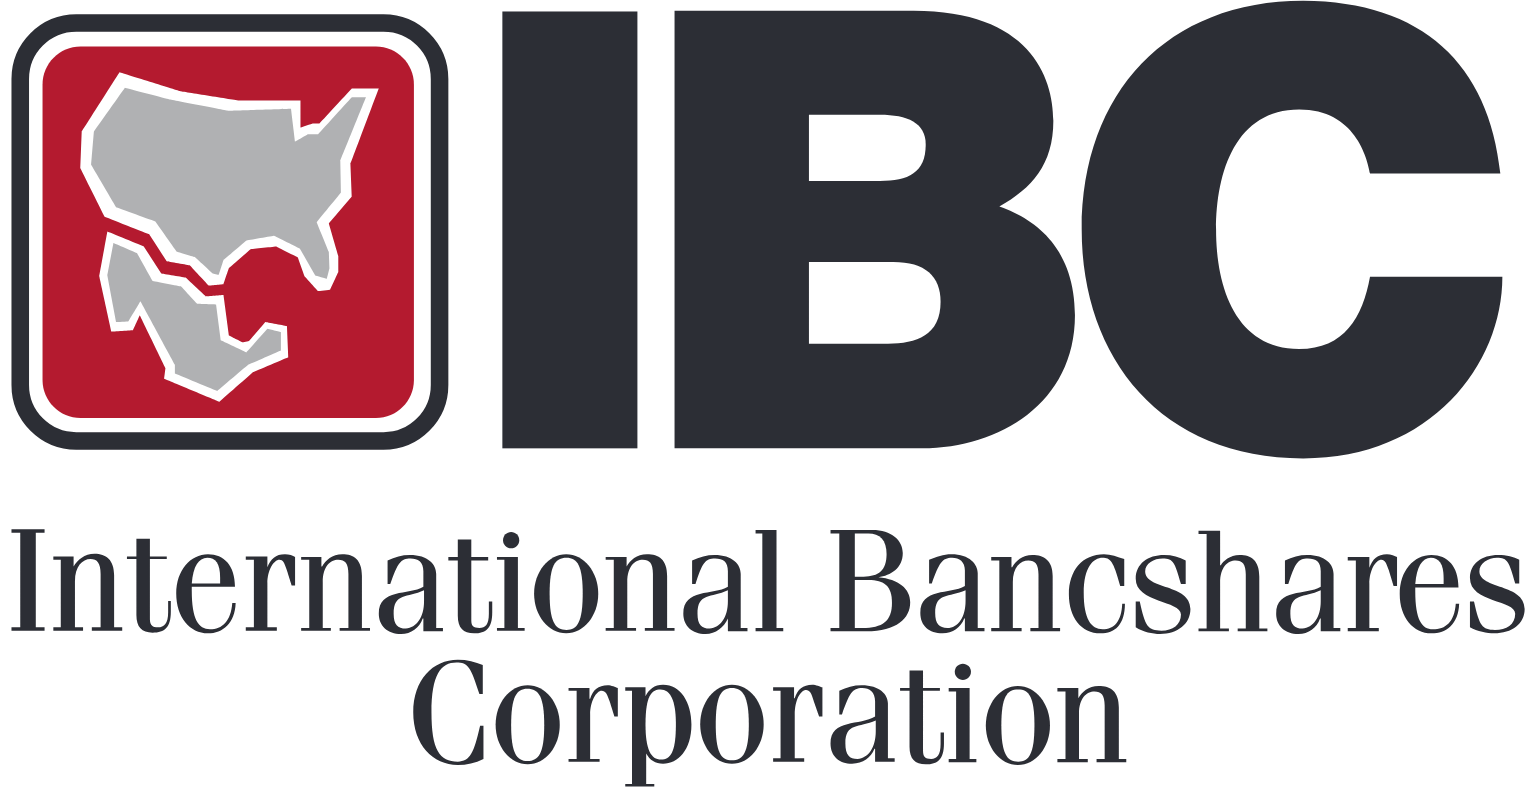 International Bancshares Corp logo large (transparent PNG)